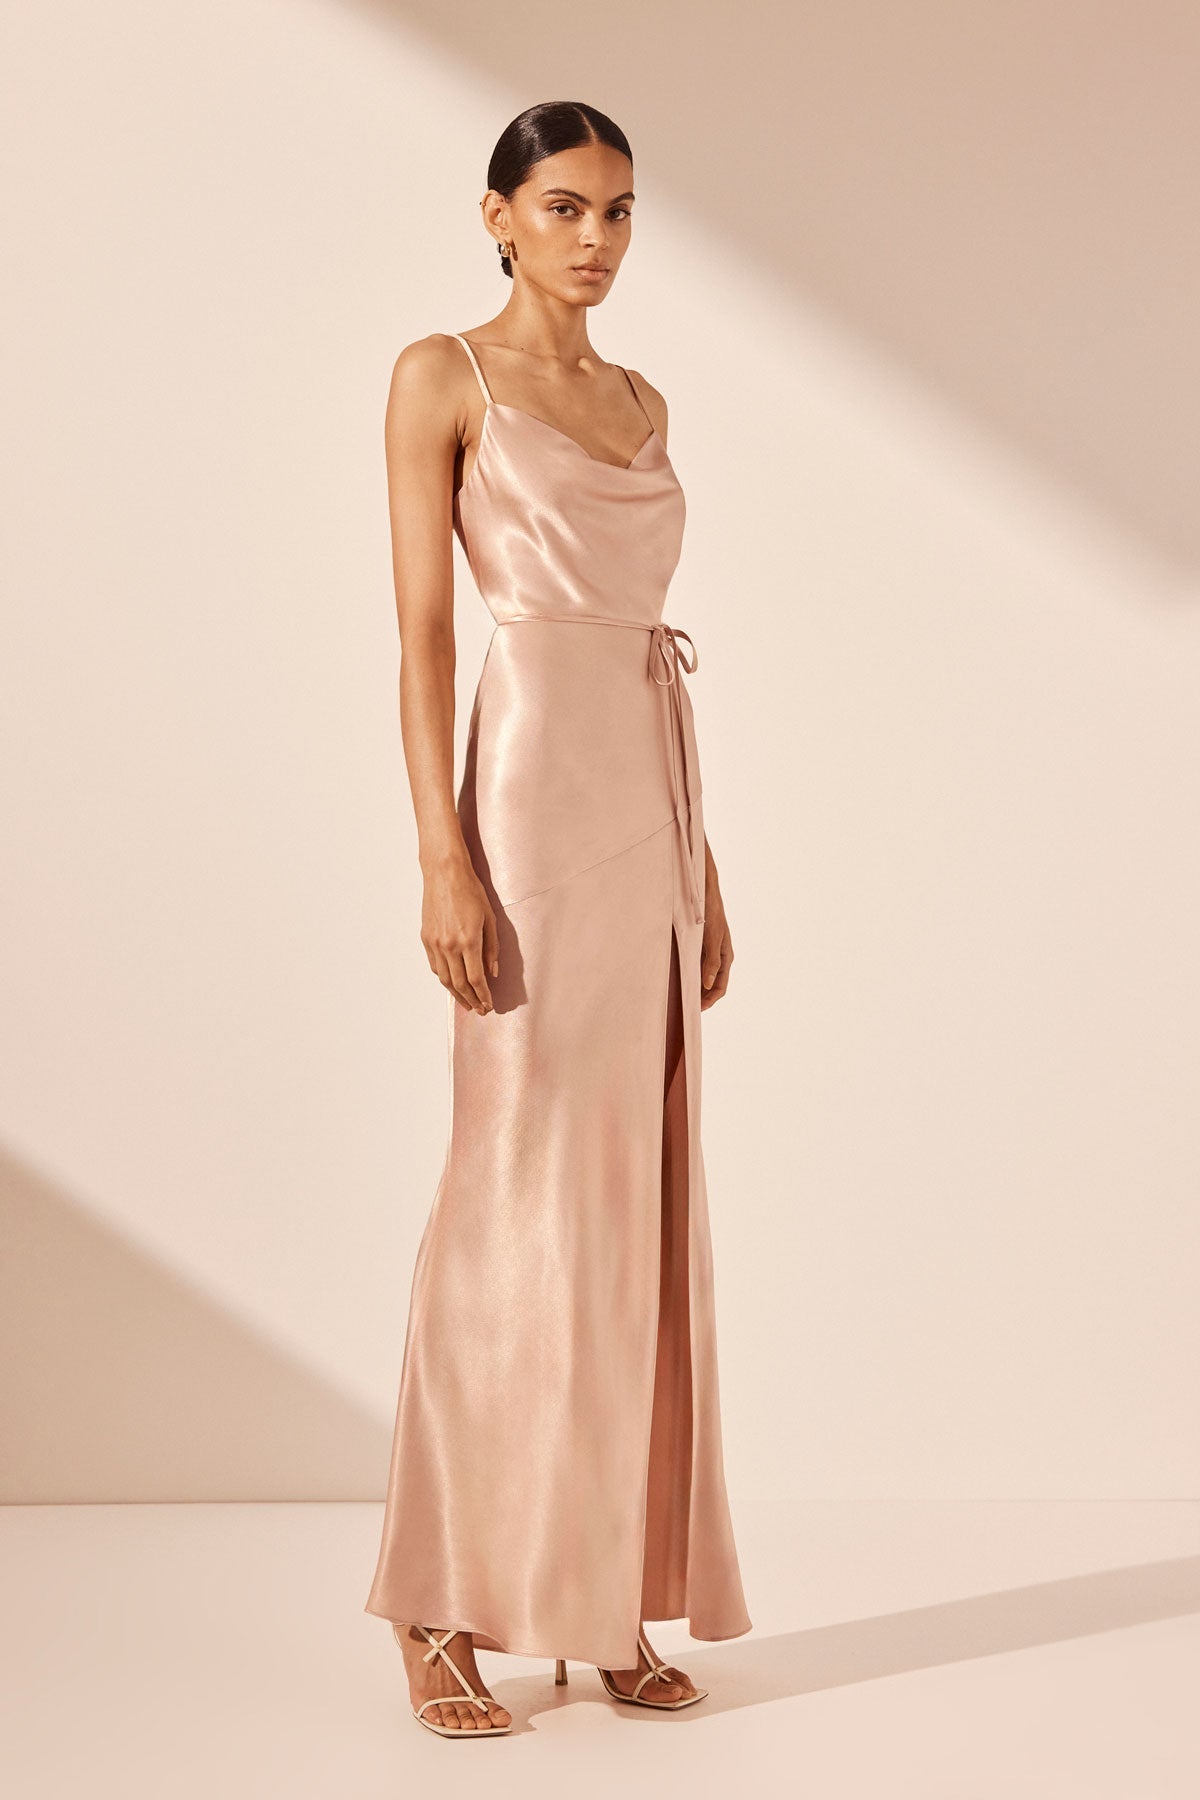 Mckenna Impact Dress in Rose Taupe, Statement Maxi Dress